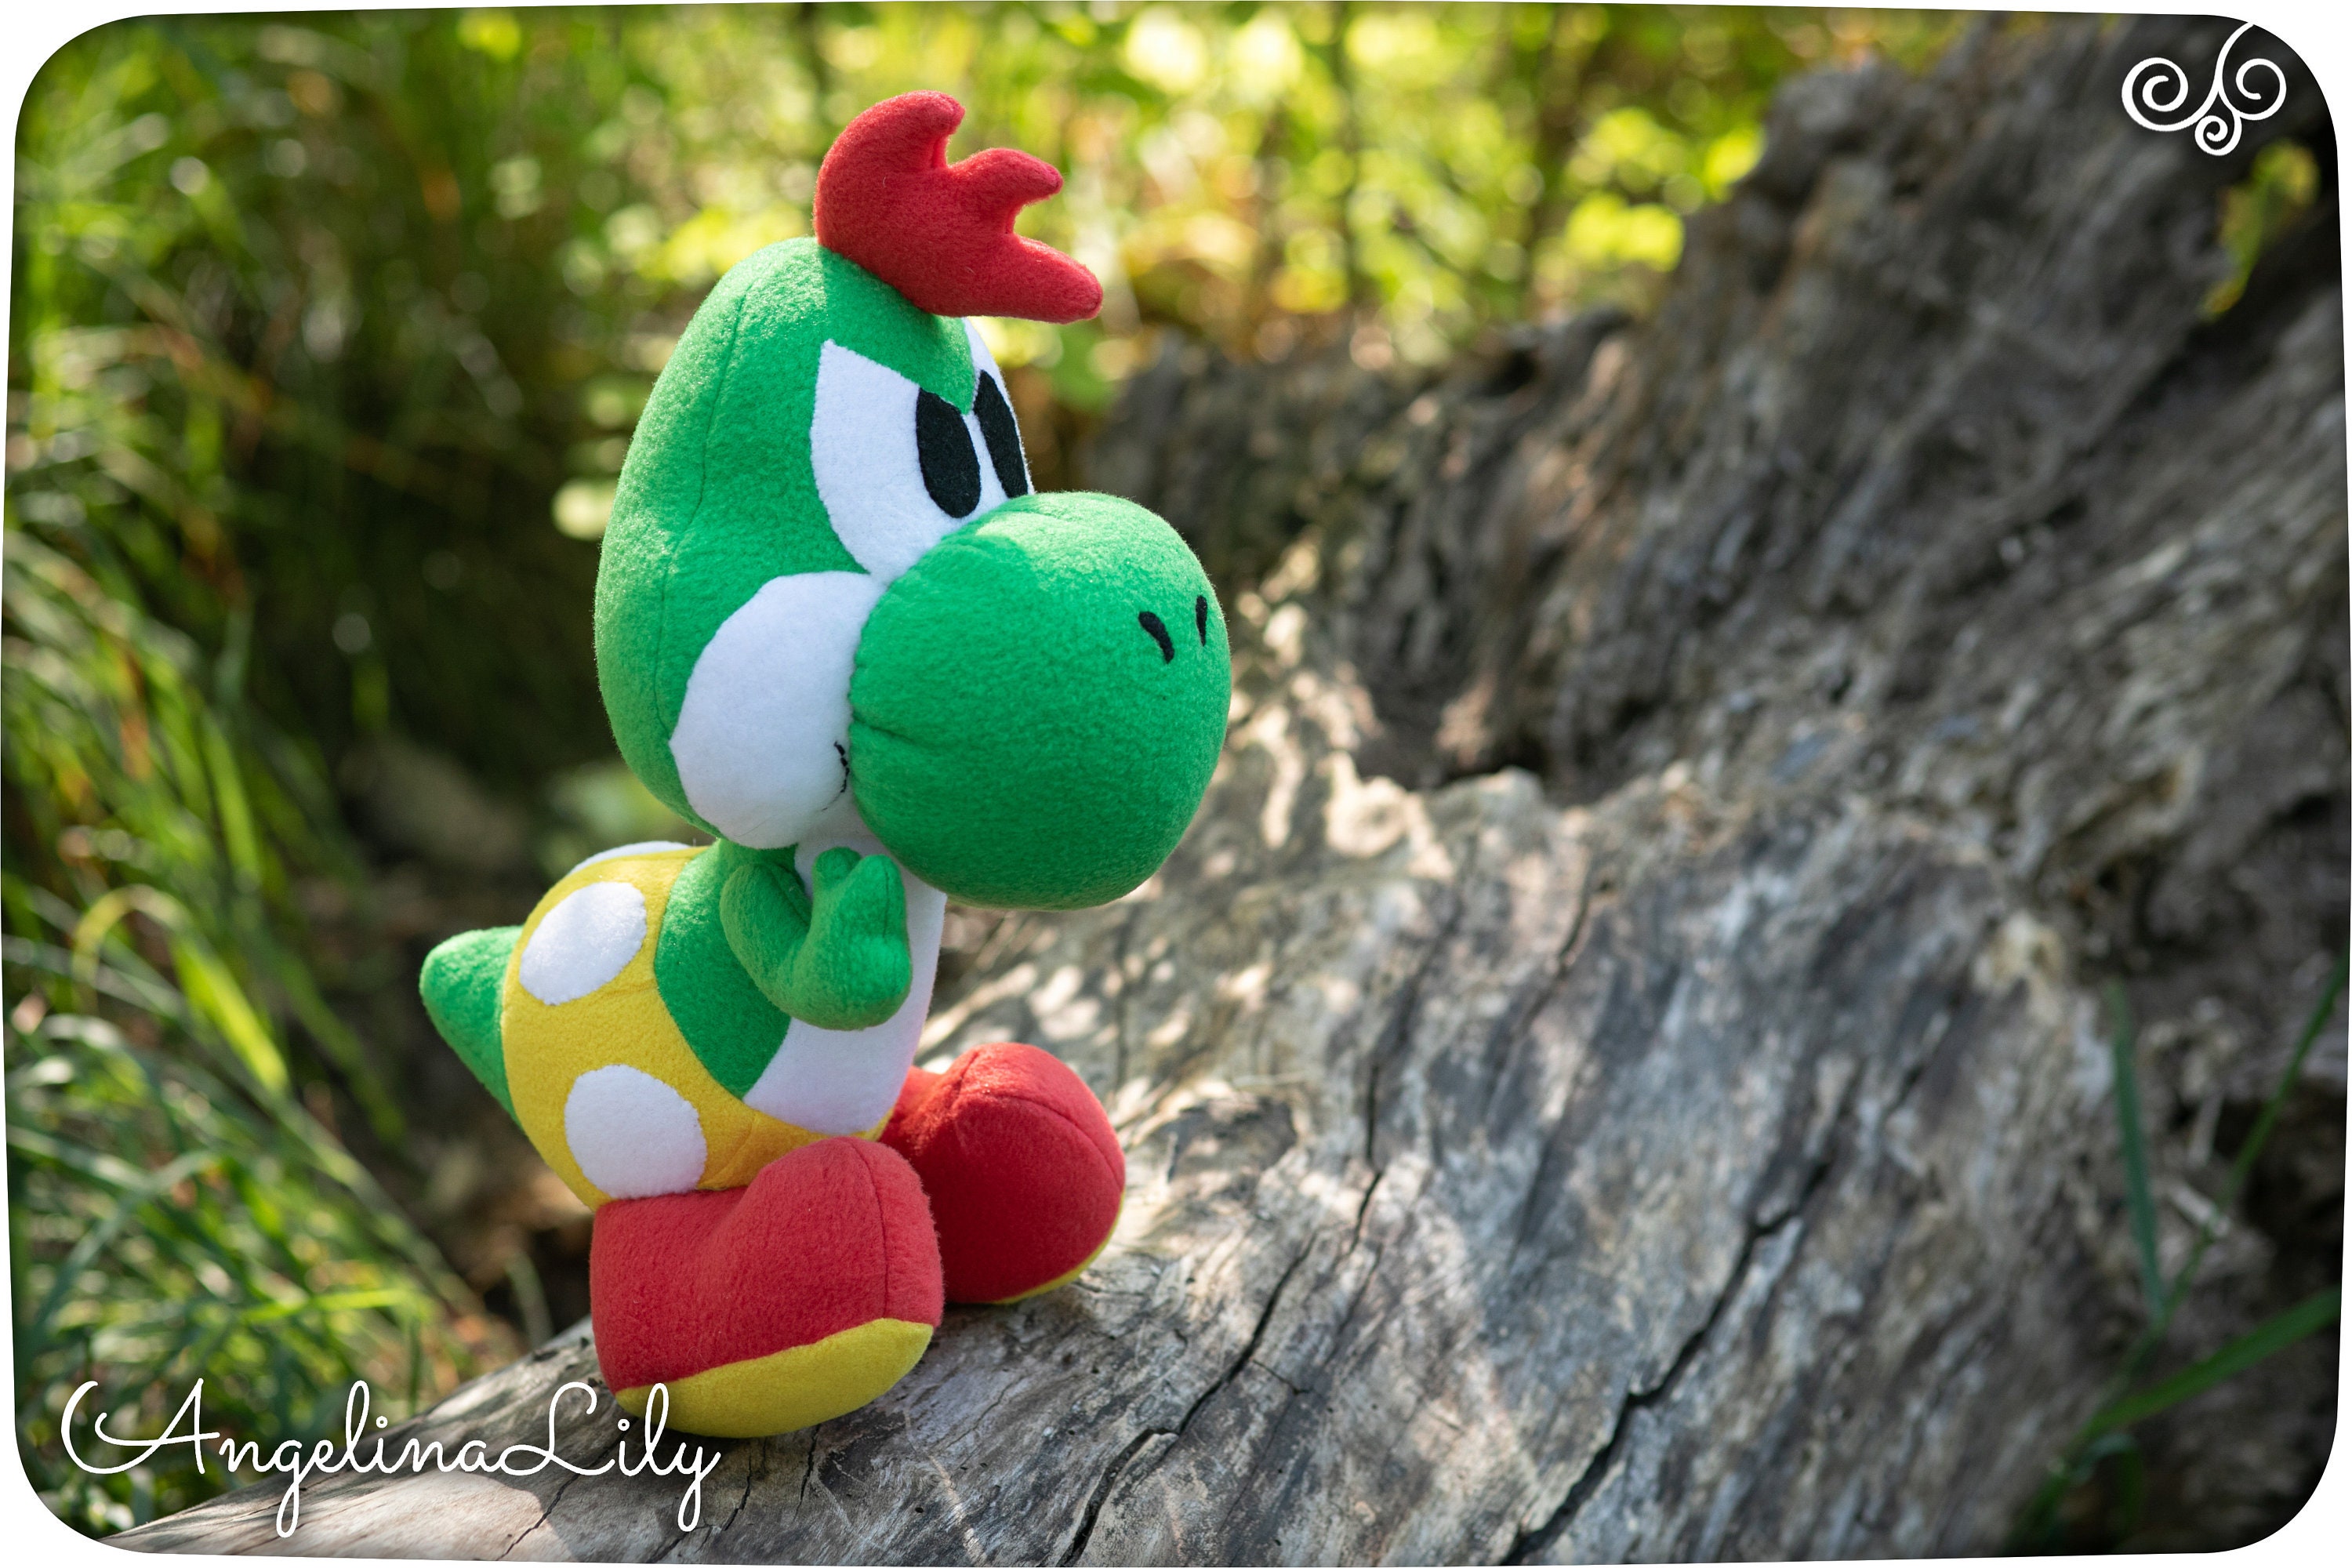 Peluche Nintendo Yoshi Dinosaure 24 cm doudou enfant adulte